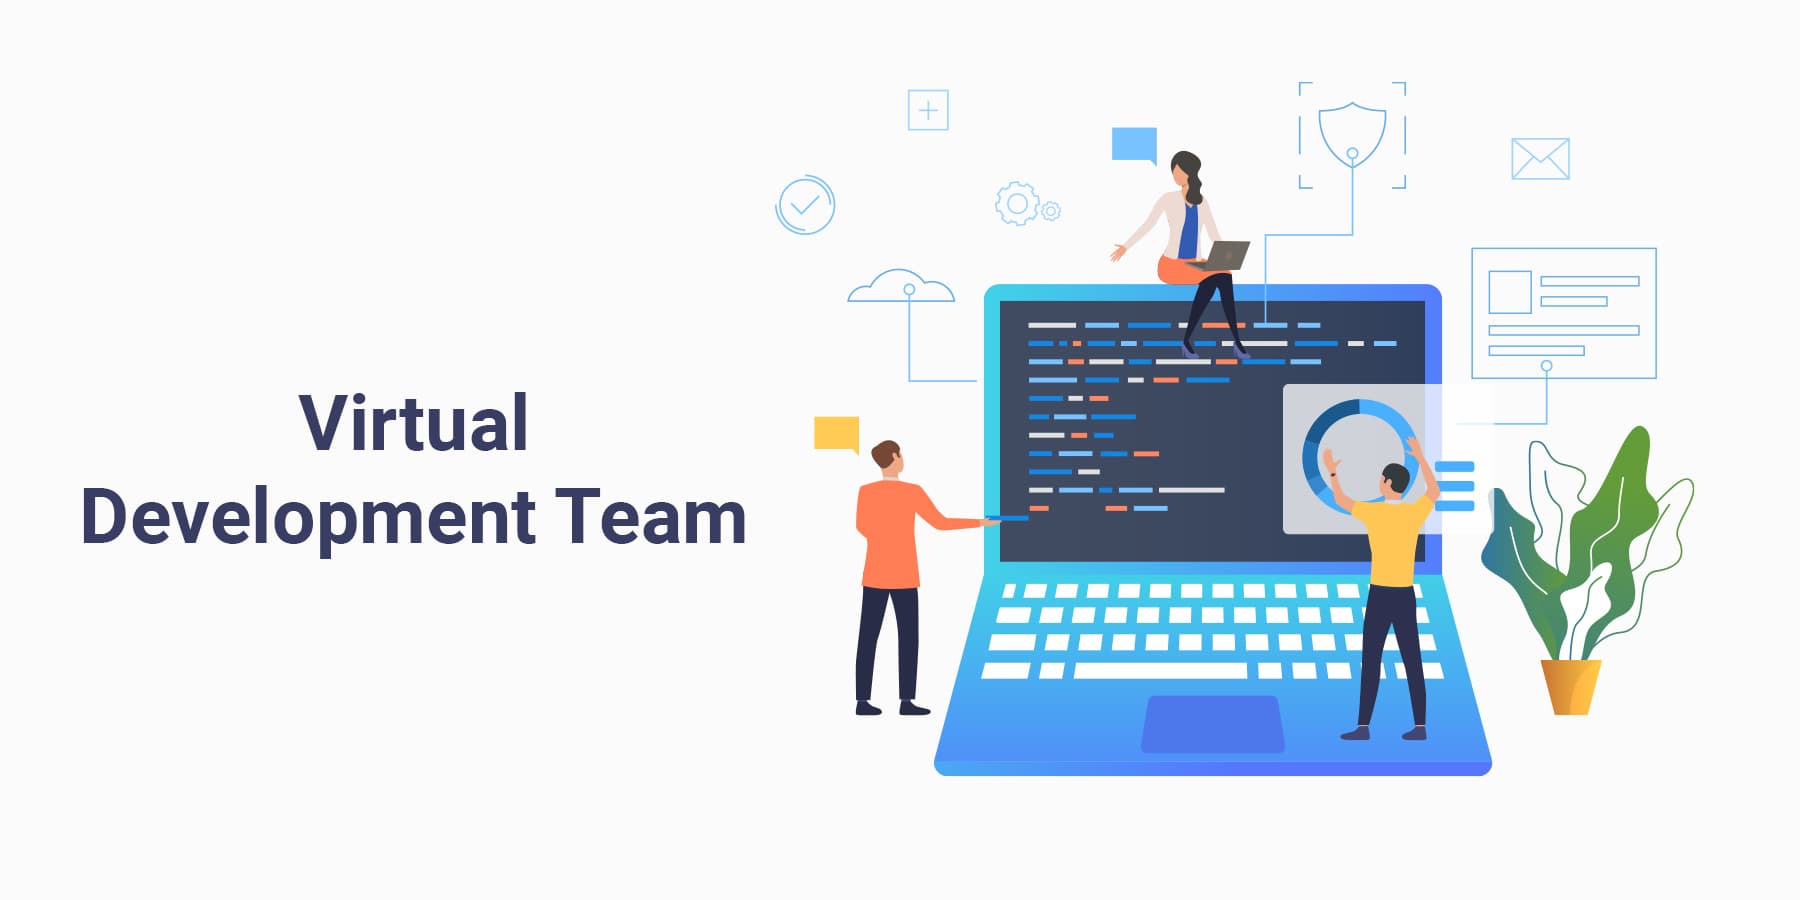 The Beauty of A Virtual Development Team